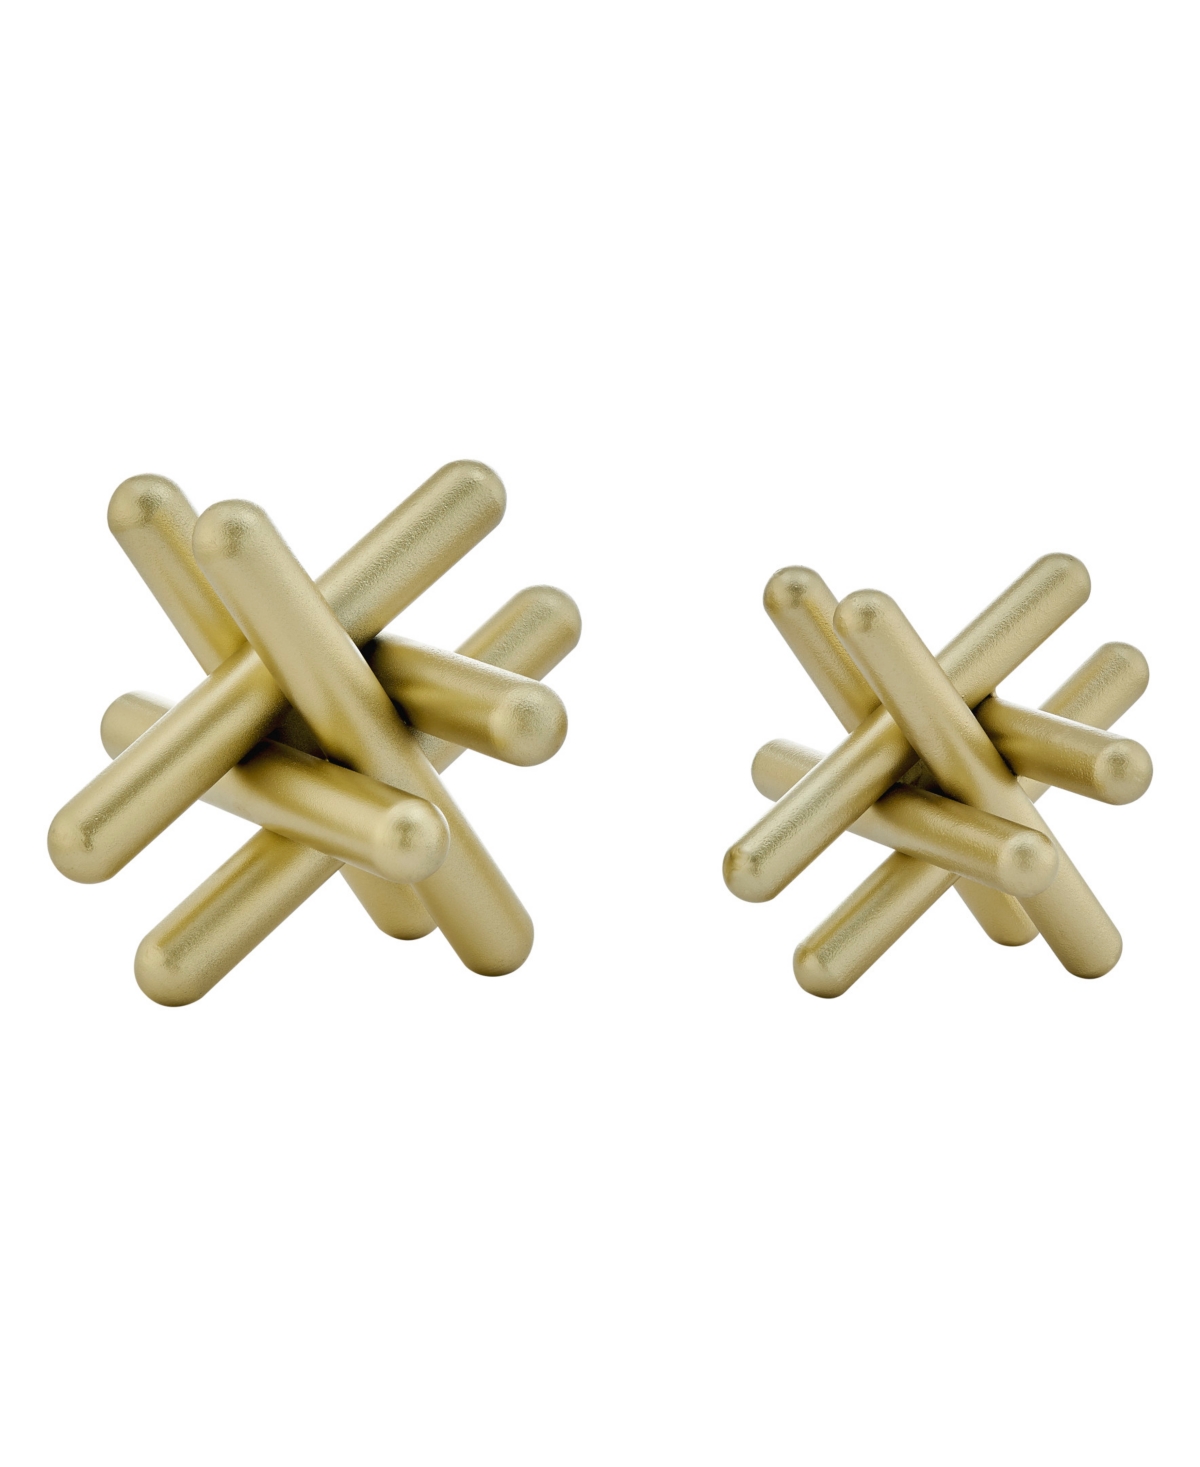 Danya B Small And Medium 2-piece Abstract Gold-tone Finish Textured Metal Geometric Sculptures Set